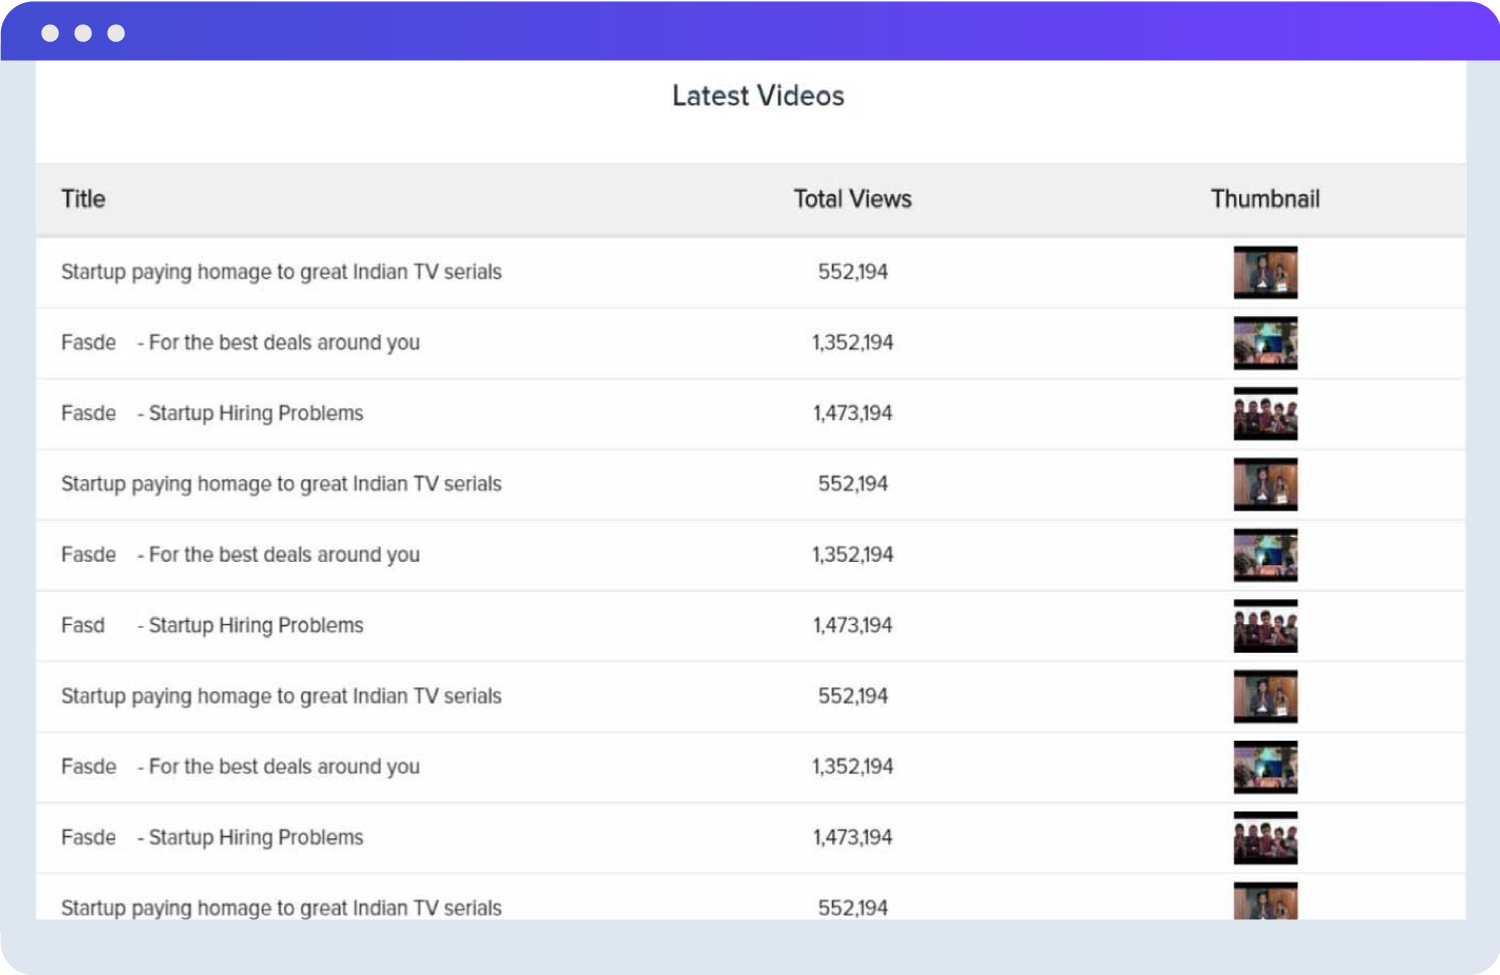 YouTube Video Analytics Report